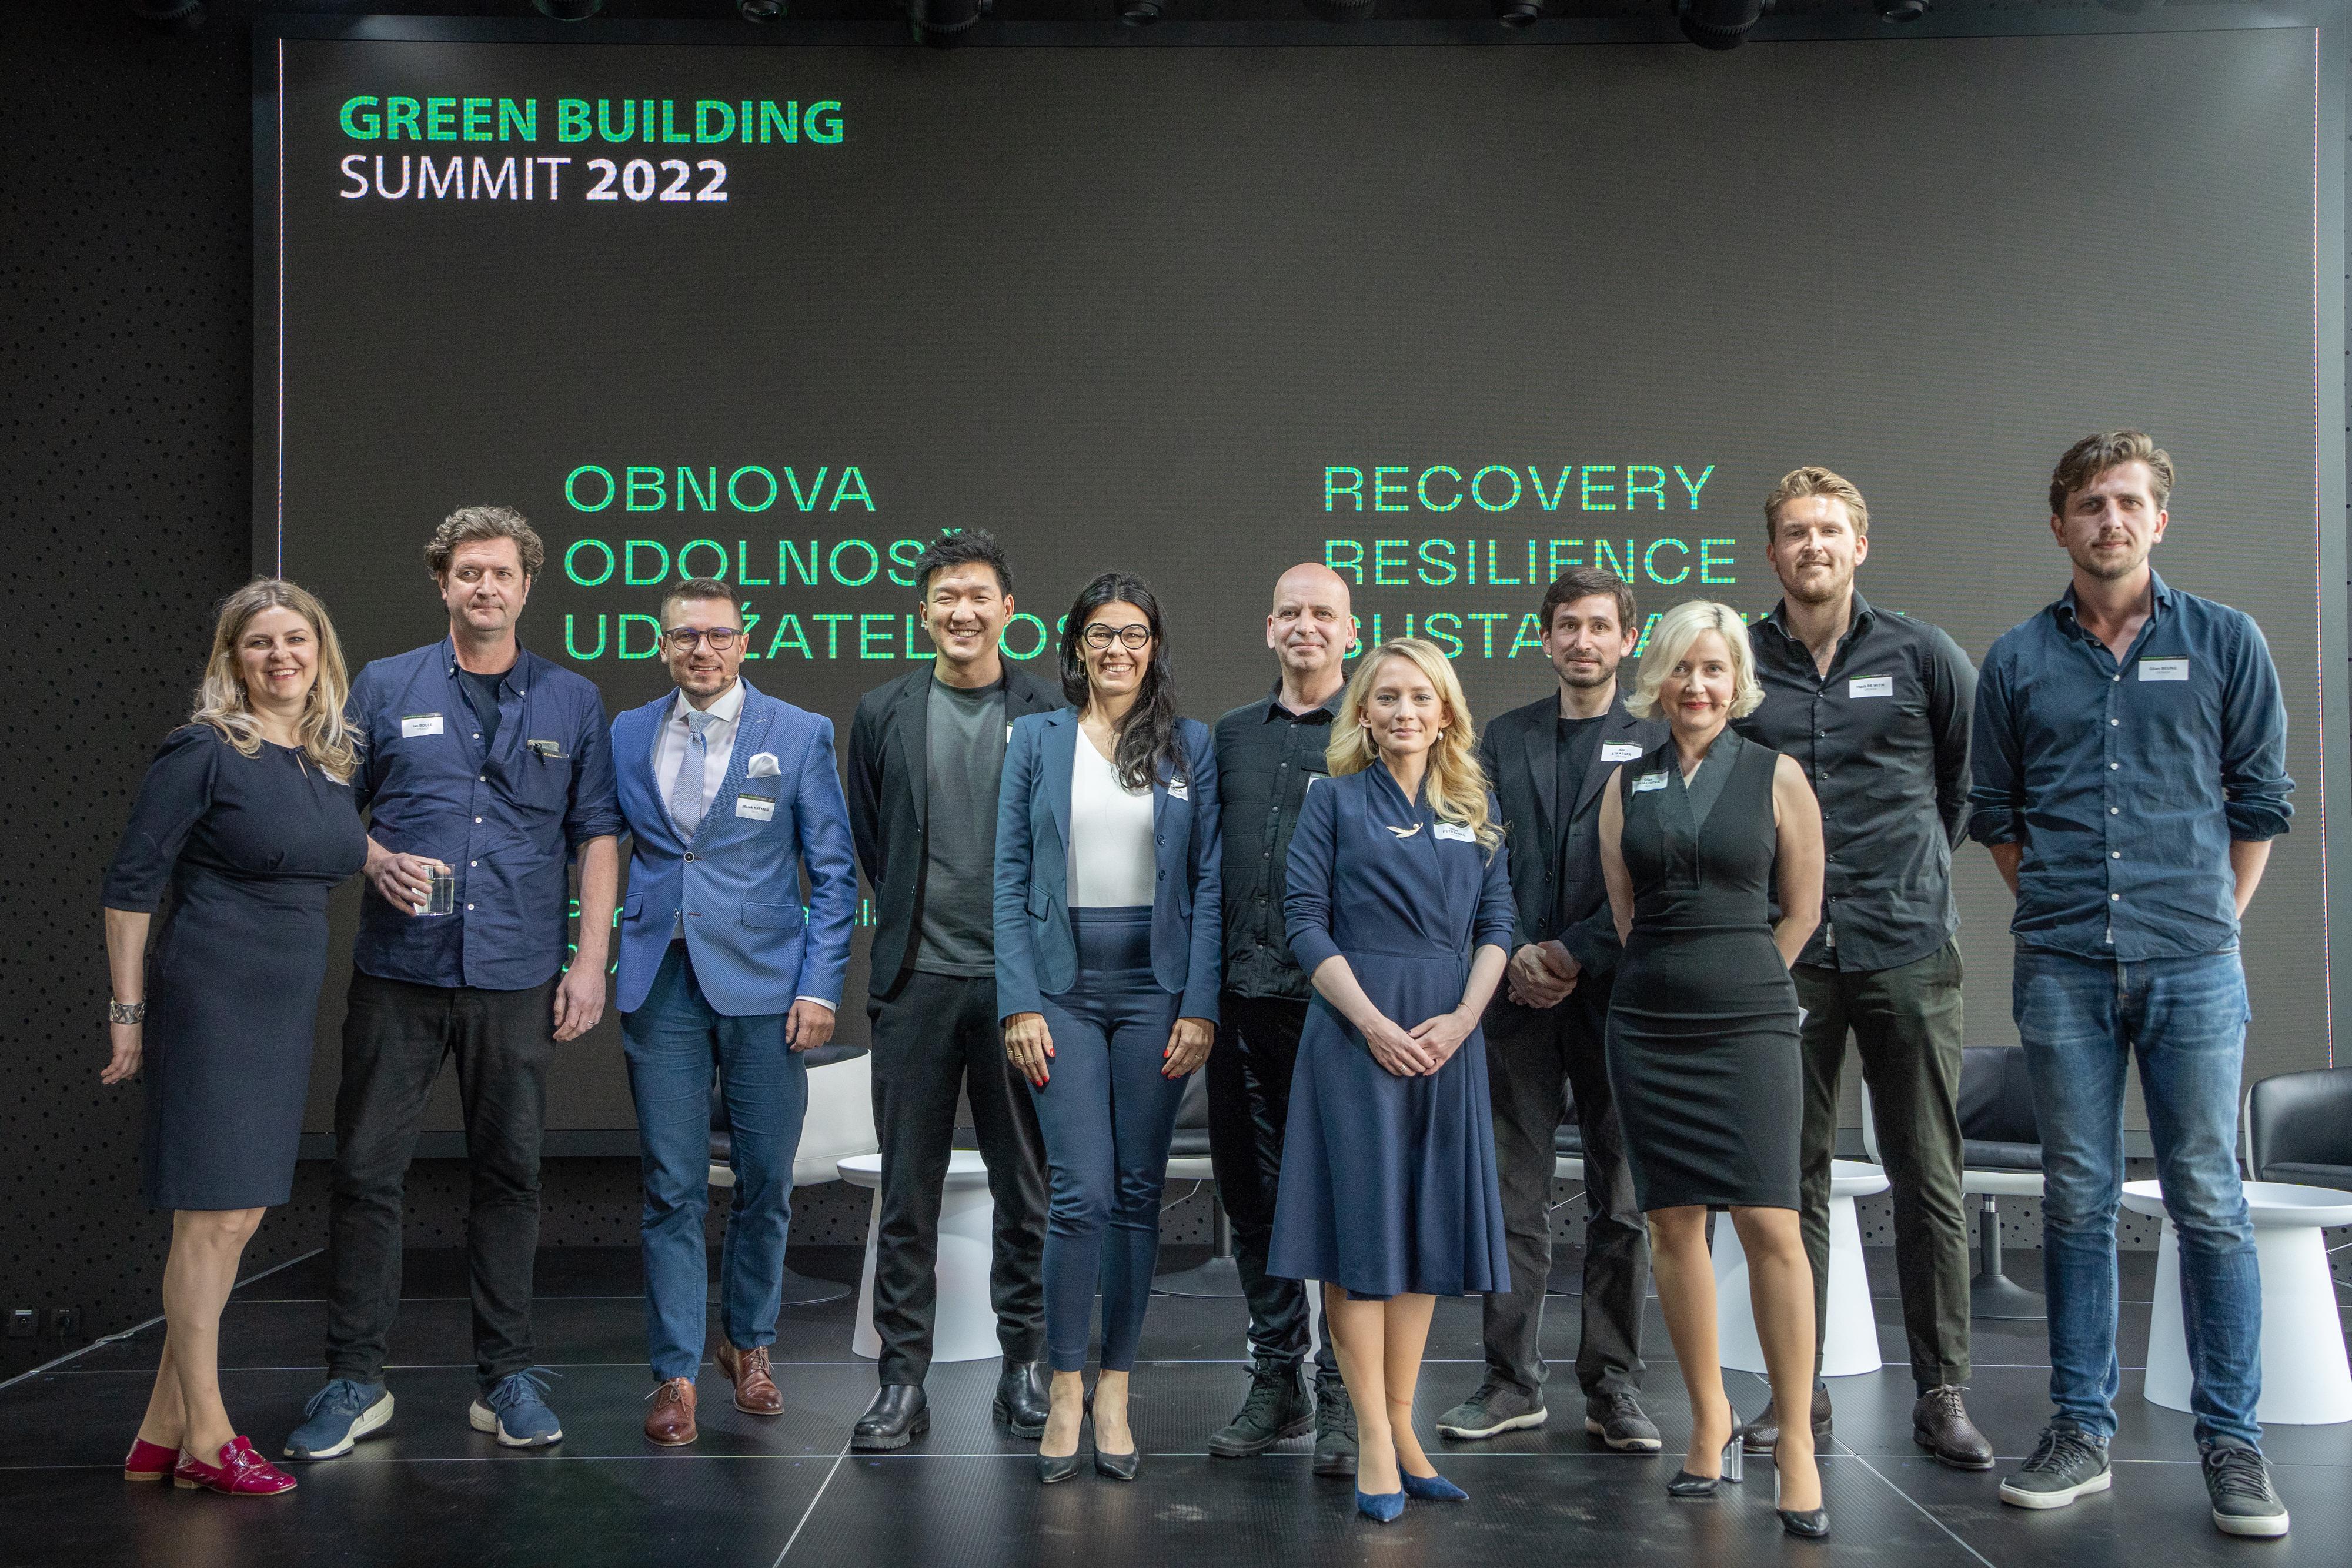 Green building summit 2022